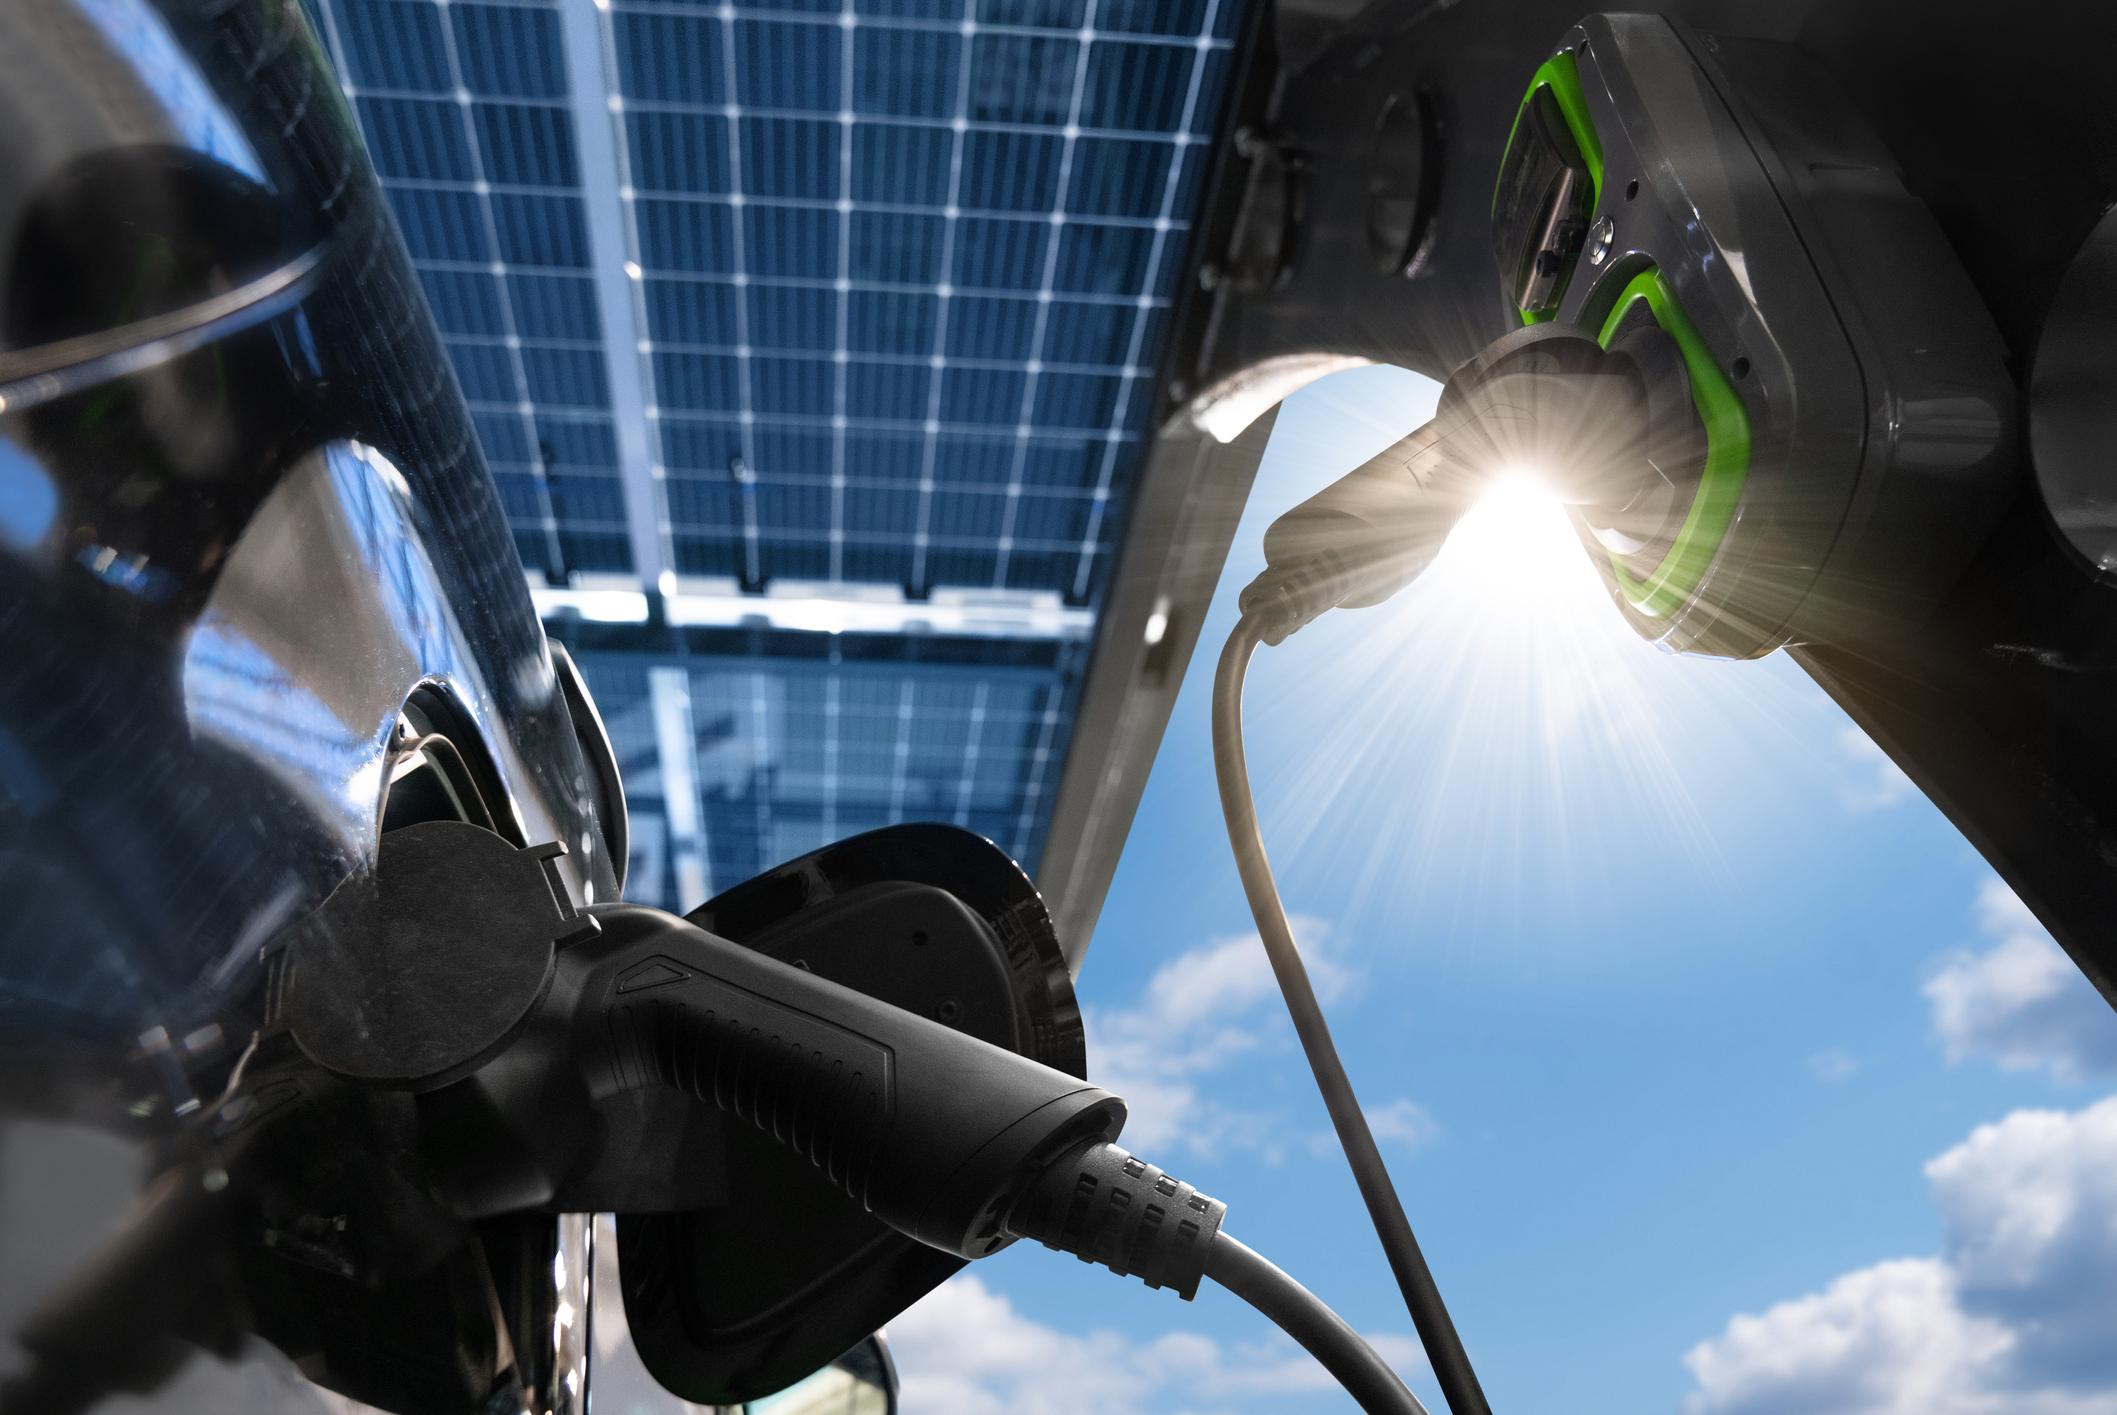 【Part 2】シリコンバレーからの新・電力網への提言： テスラが実現済みの蓄電池、EV、ソーラー発電、 Virtual Power Plant垂直統合の分散化型電力網ドミナント・デザイン